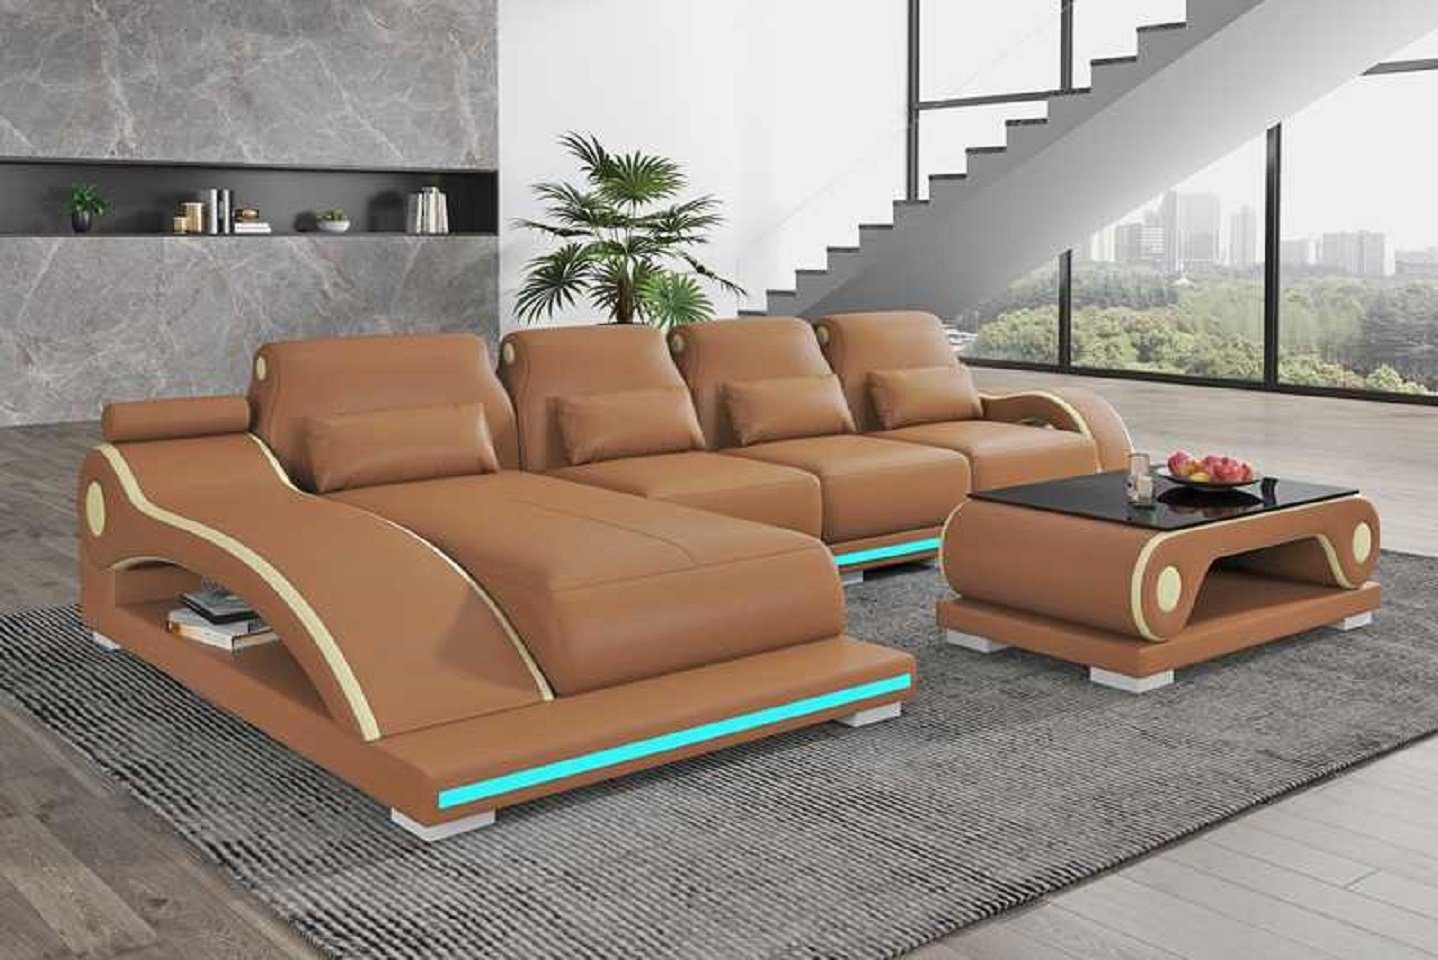 JVmoebel Ecksofa Luxus L Made Form Sofa Sofa Liege Couch, Ecksofa Teile, Moderne Braun in 3 Europe